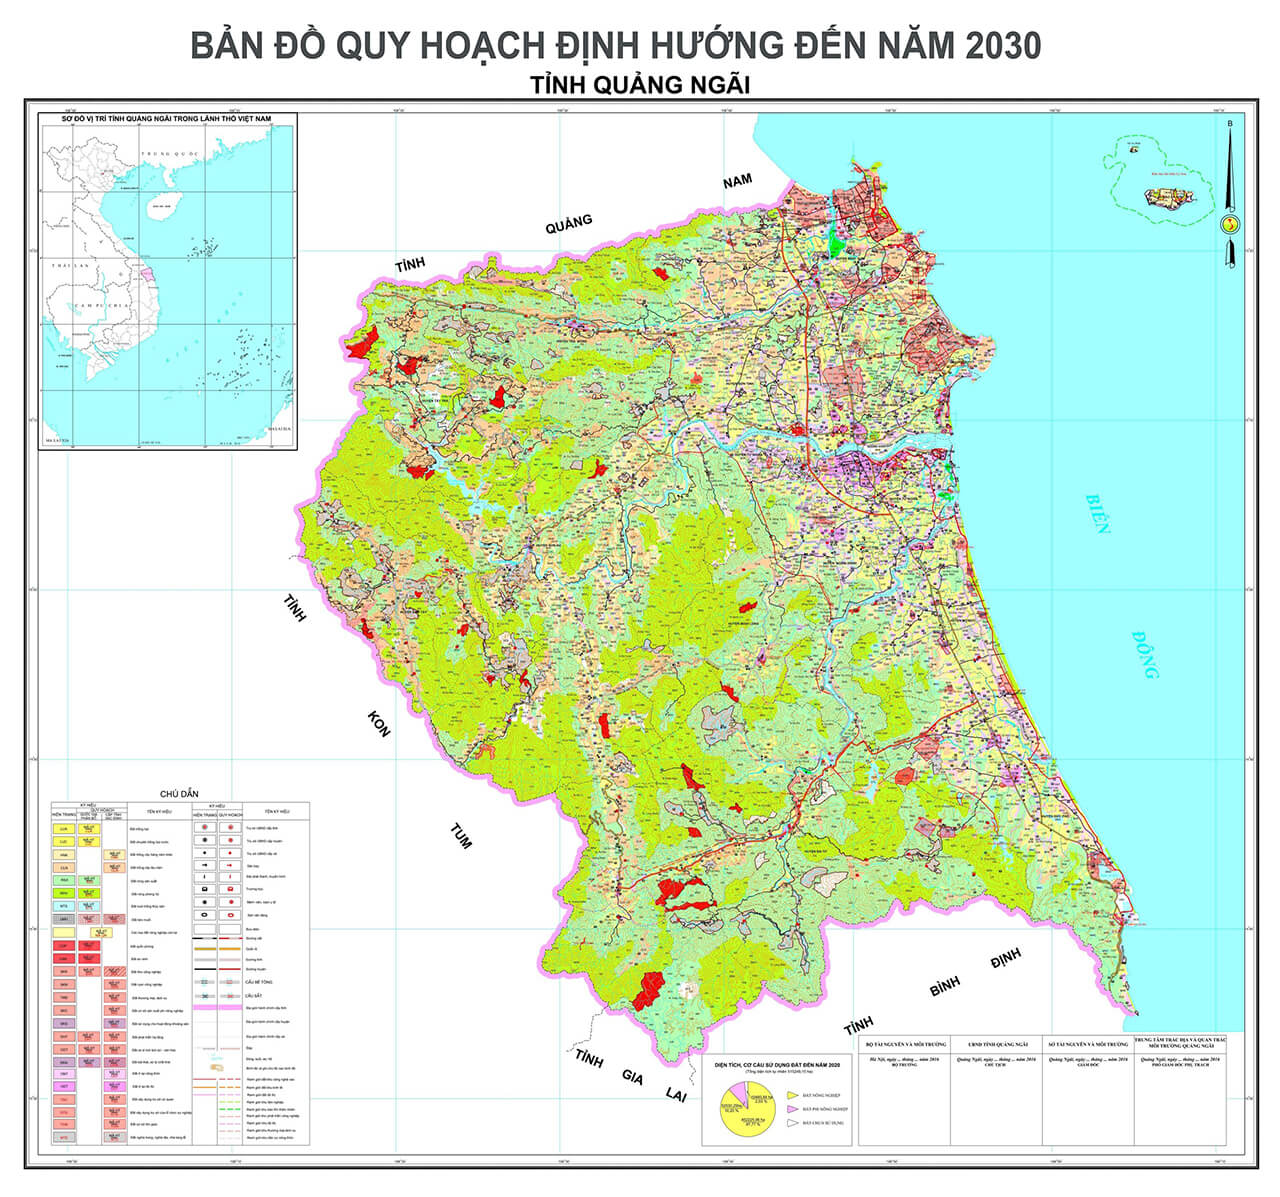 ban-do-quy-hoach-huyen-son-ha-tinh-quang-ngai-den-nam-2030